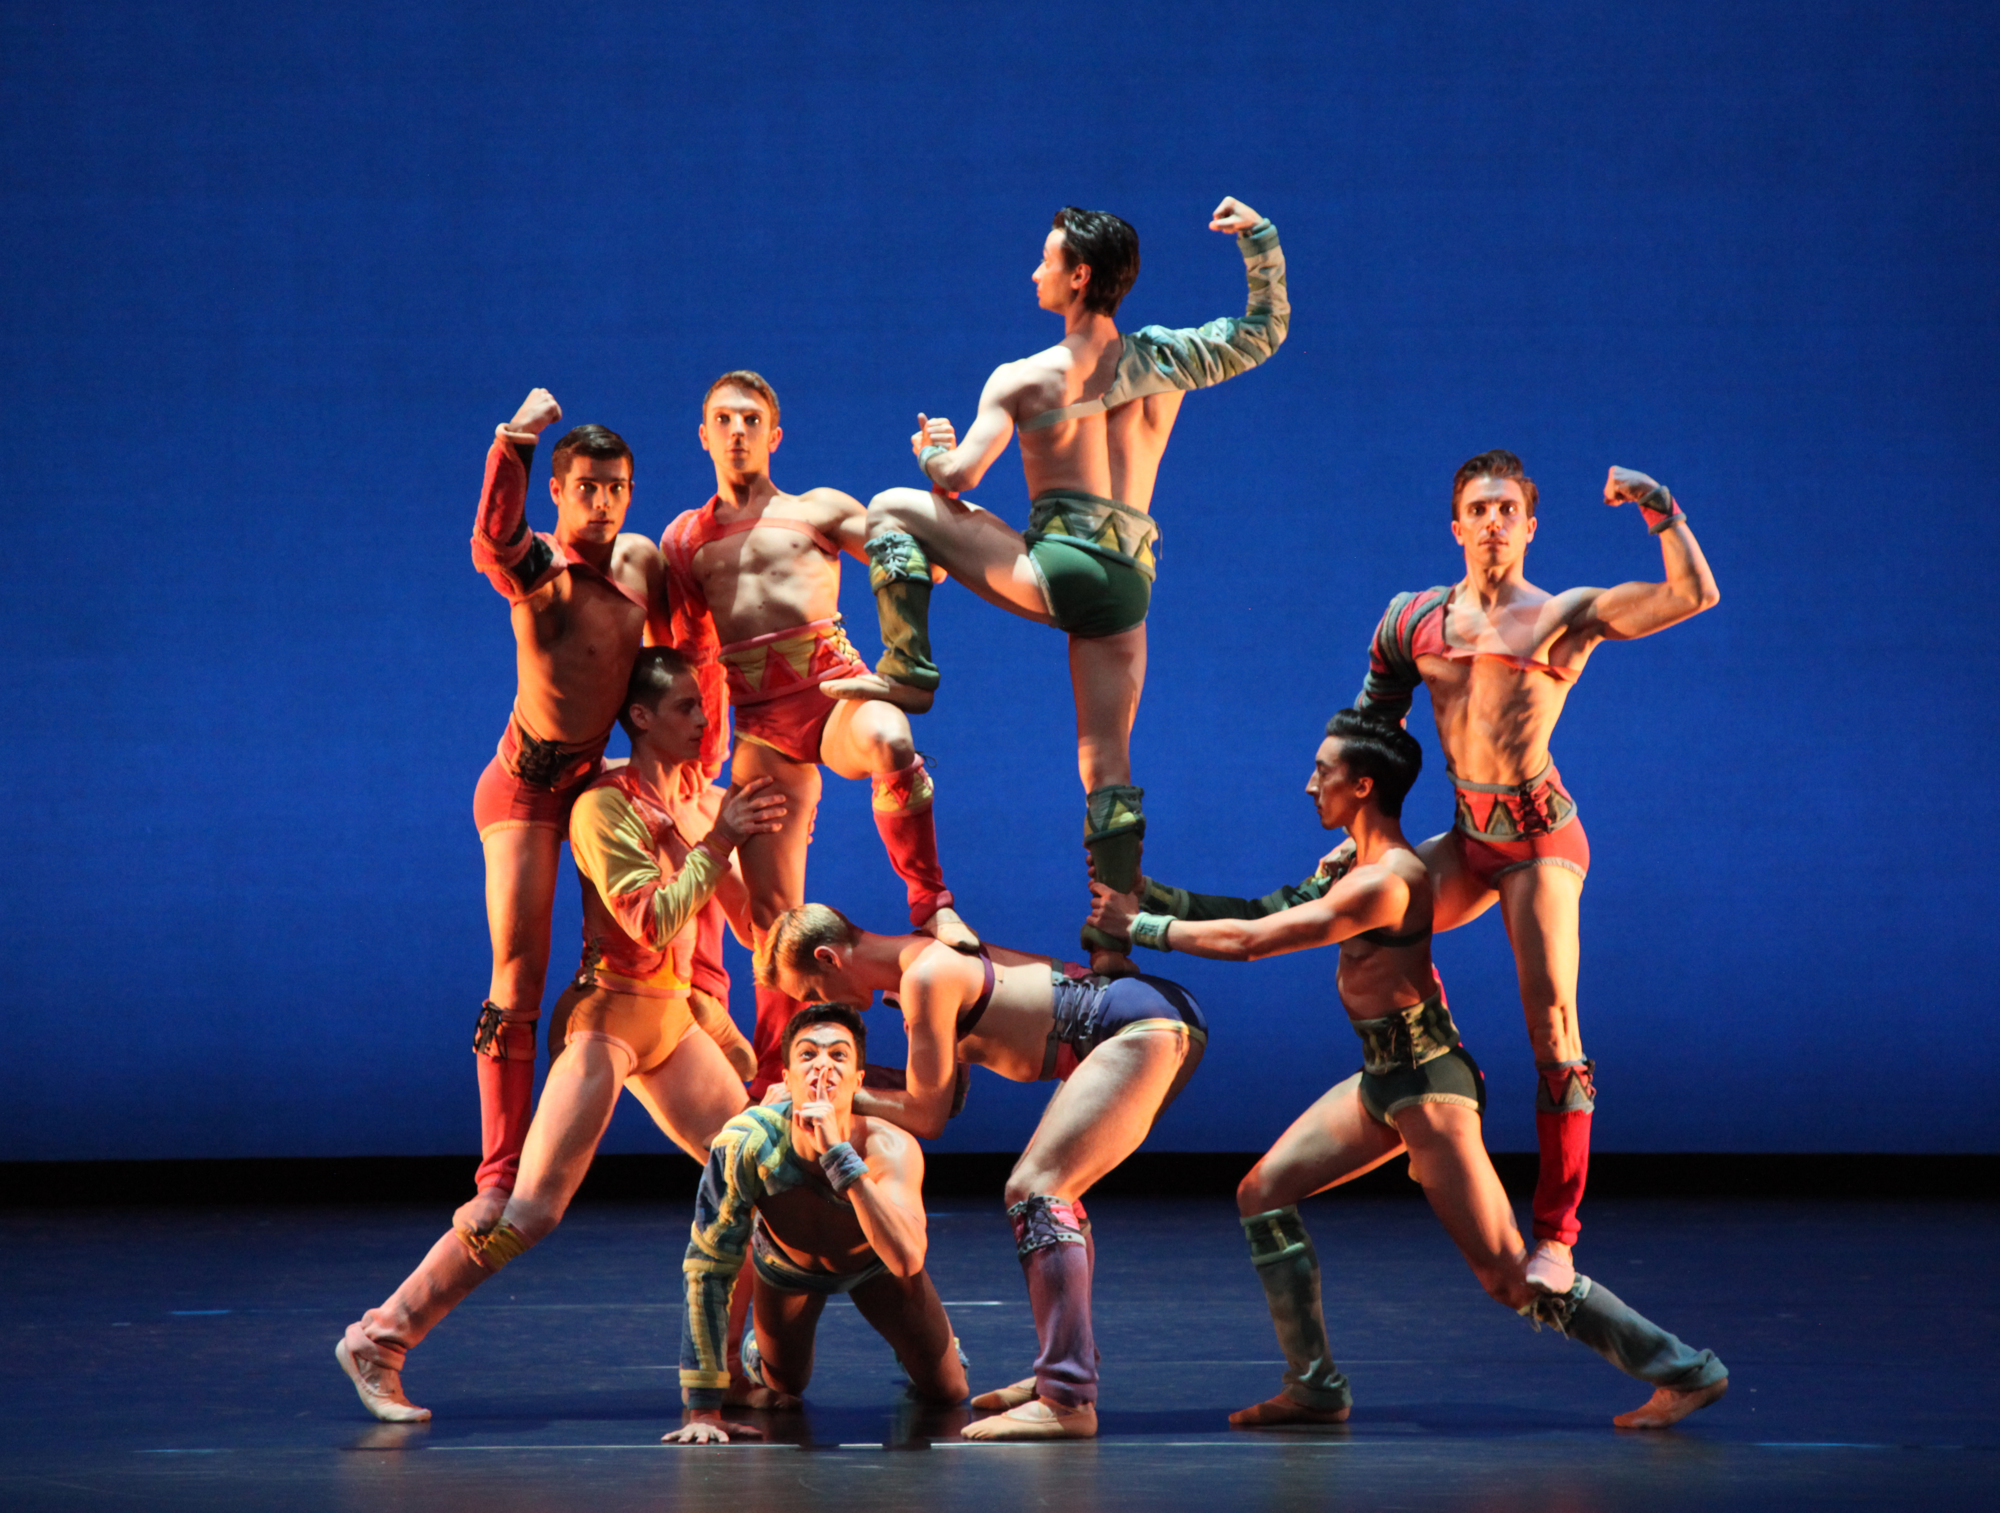 The Sarasota Ballet performed Robert North's 